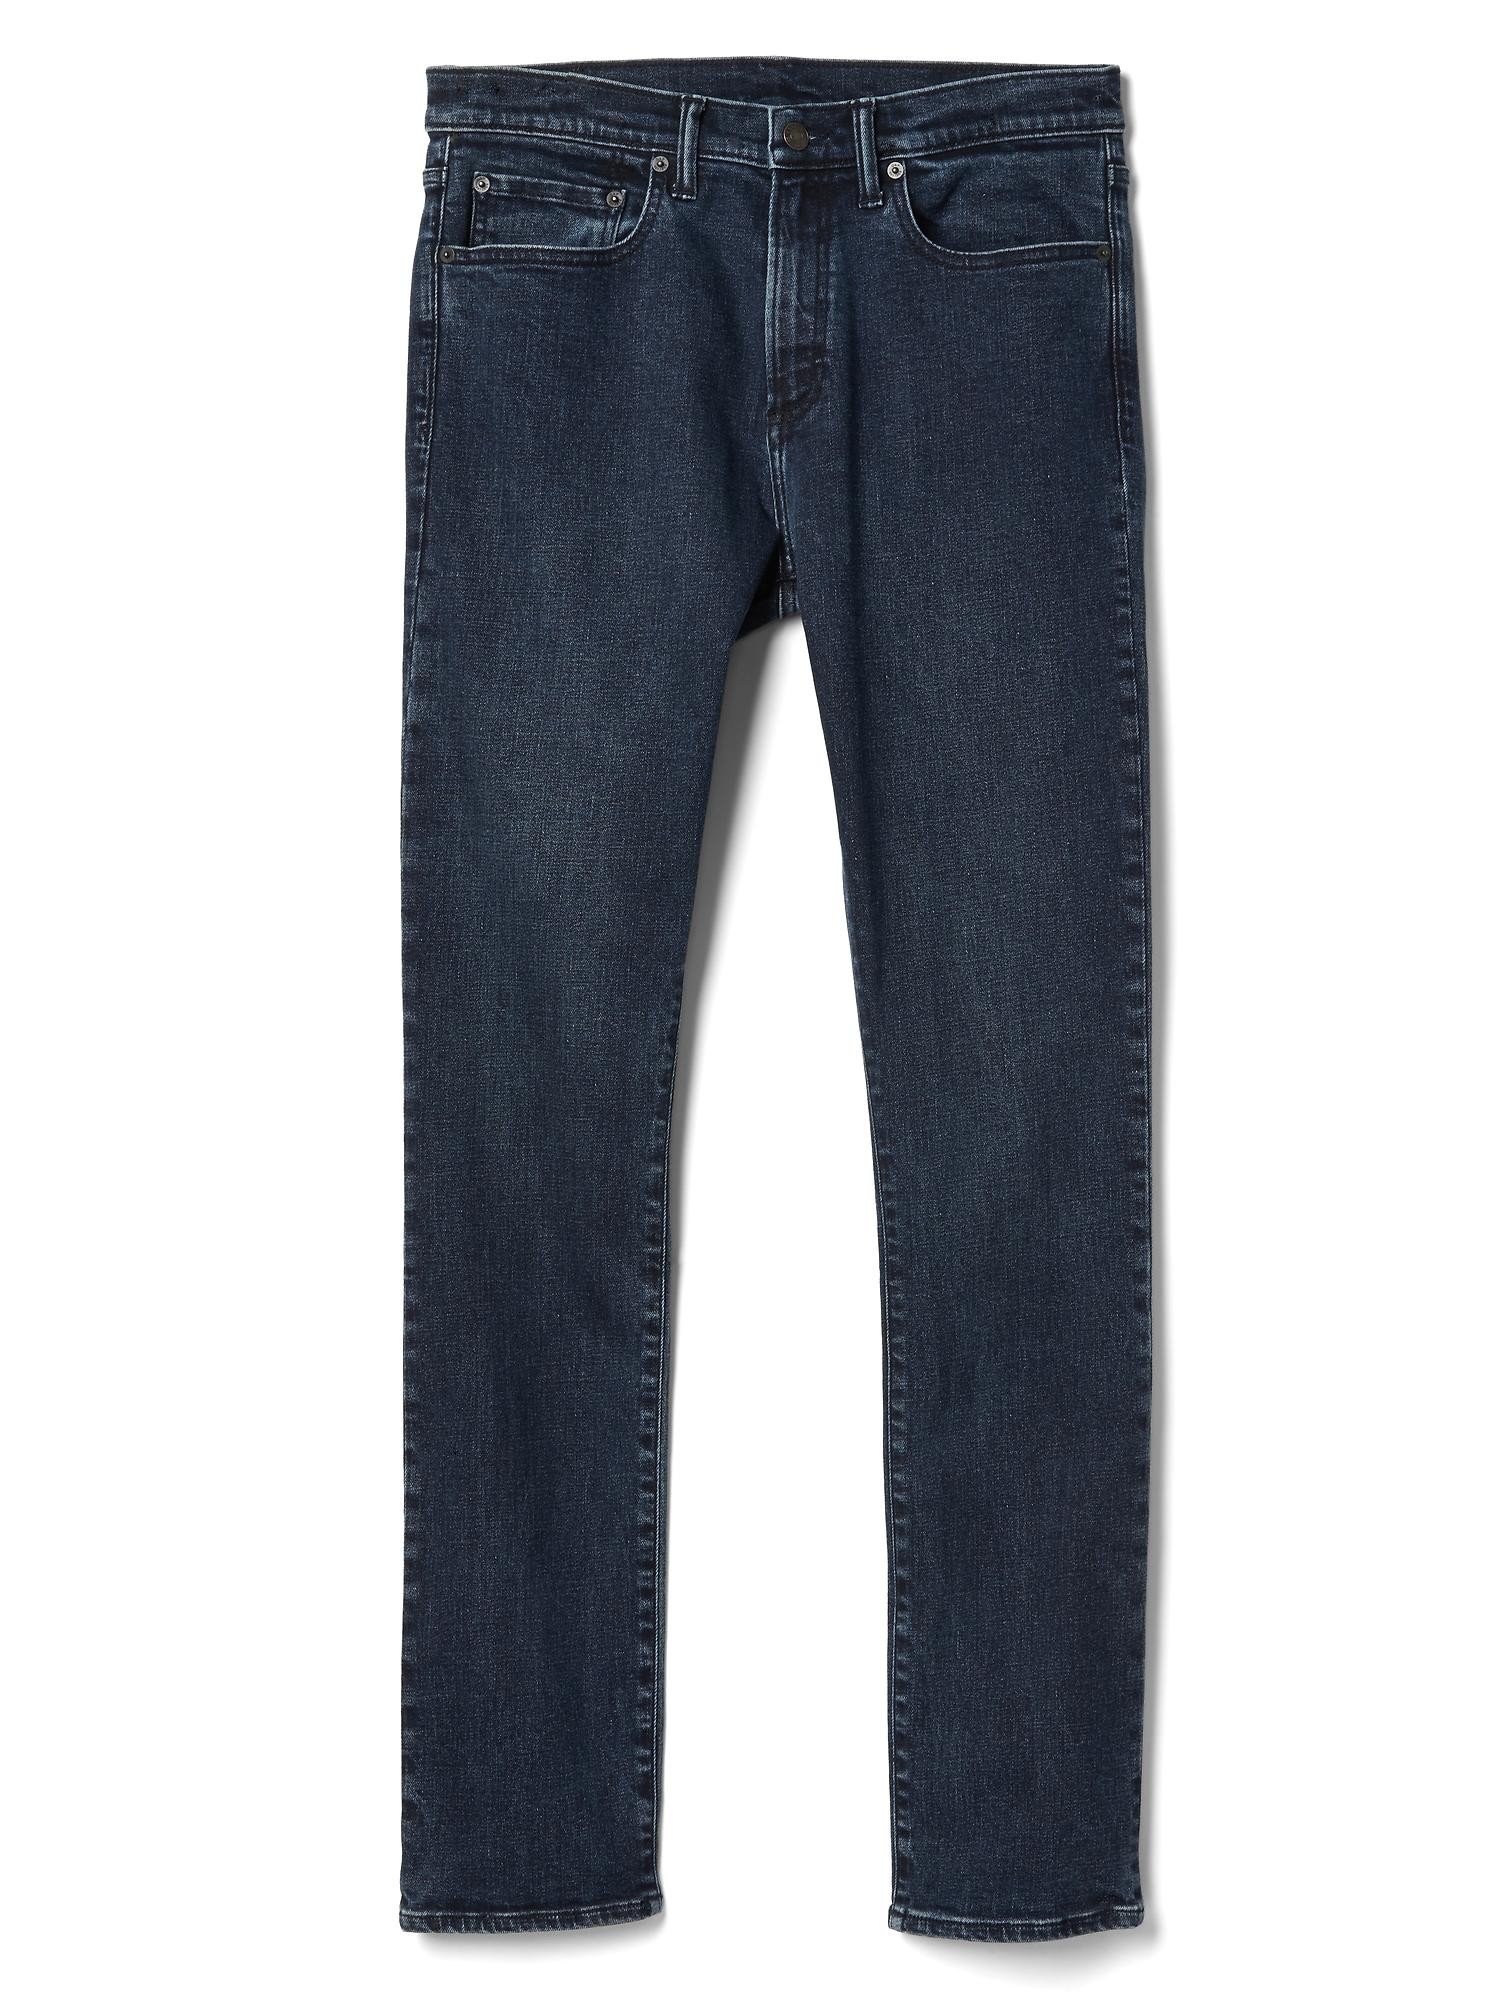 Skinny fit jean pantolon product image